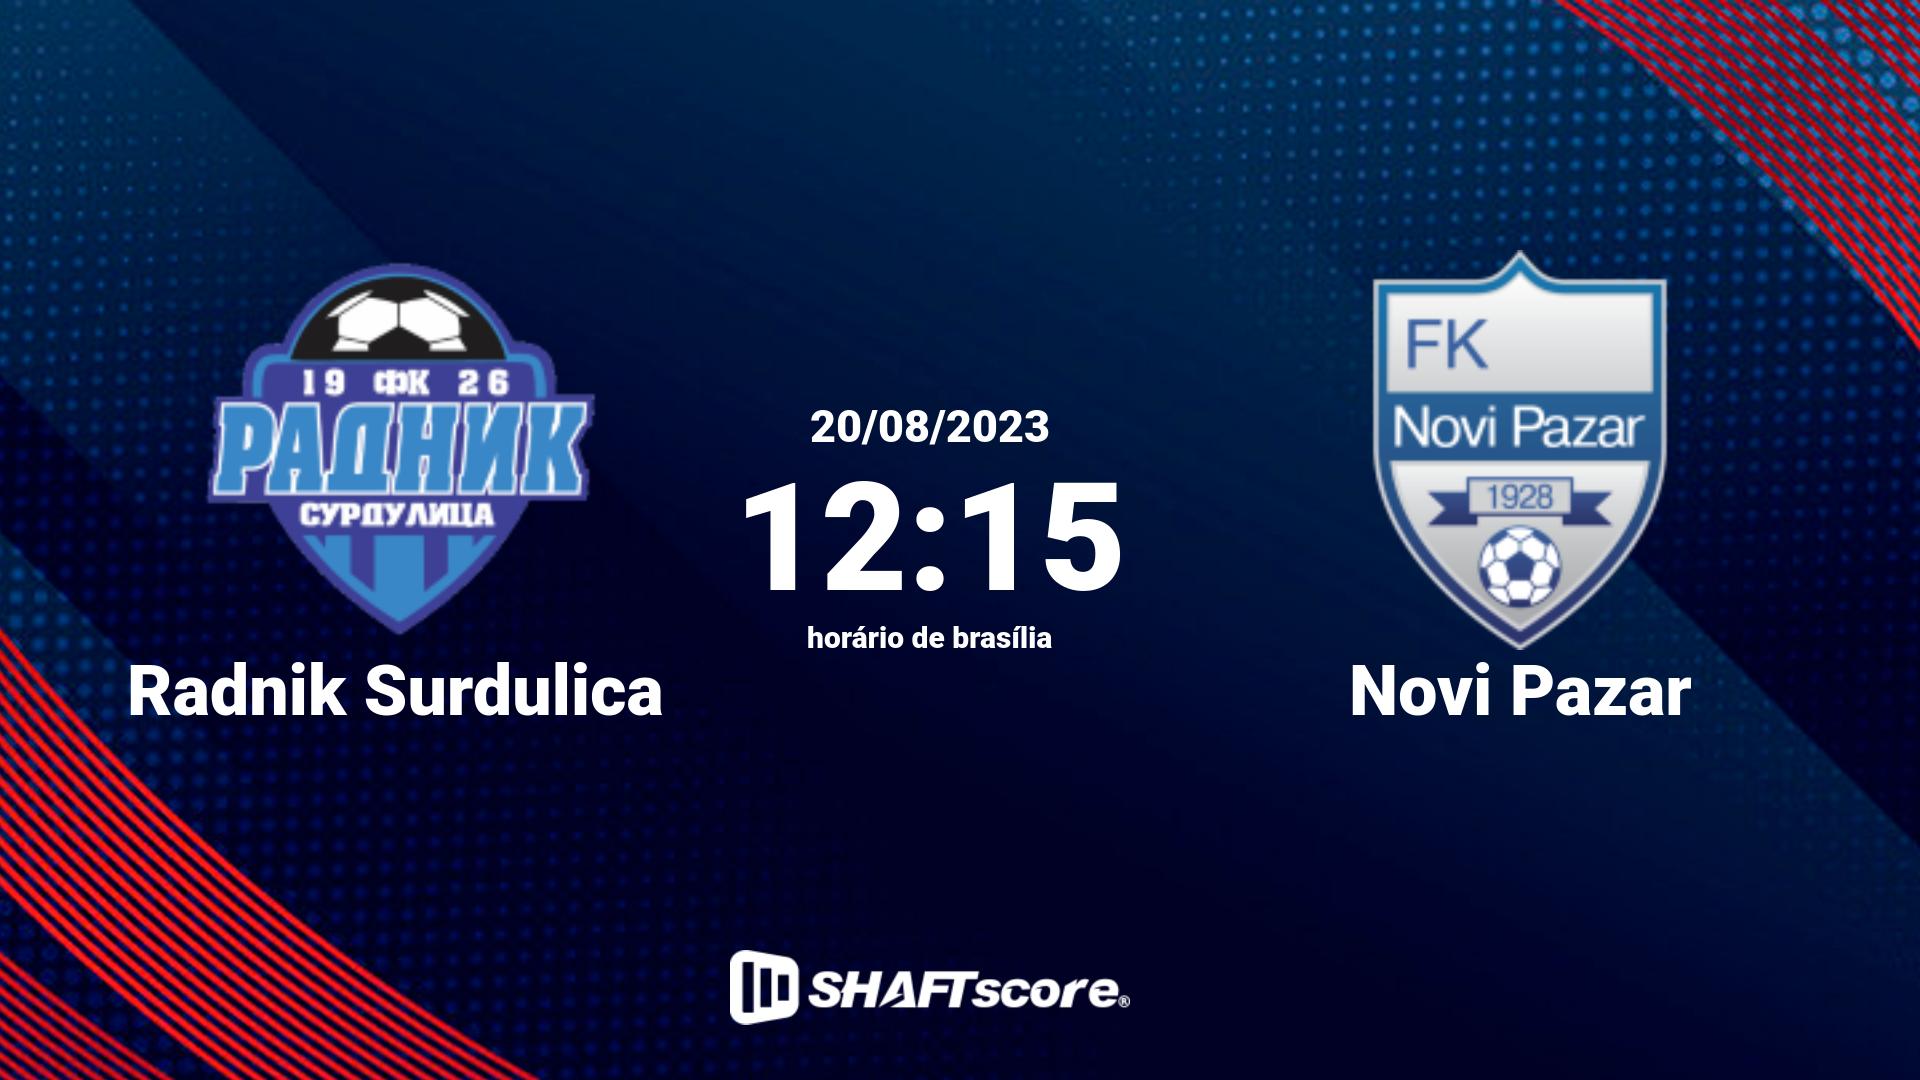 Estatísticas do jogo Radnik Surdulica vs Novi Pazar 20.08 12:15